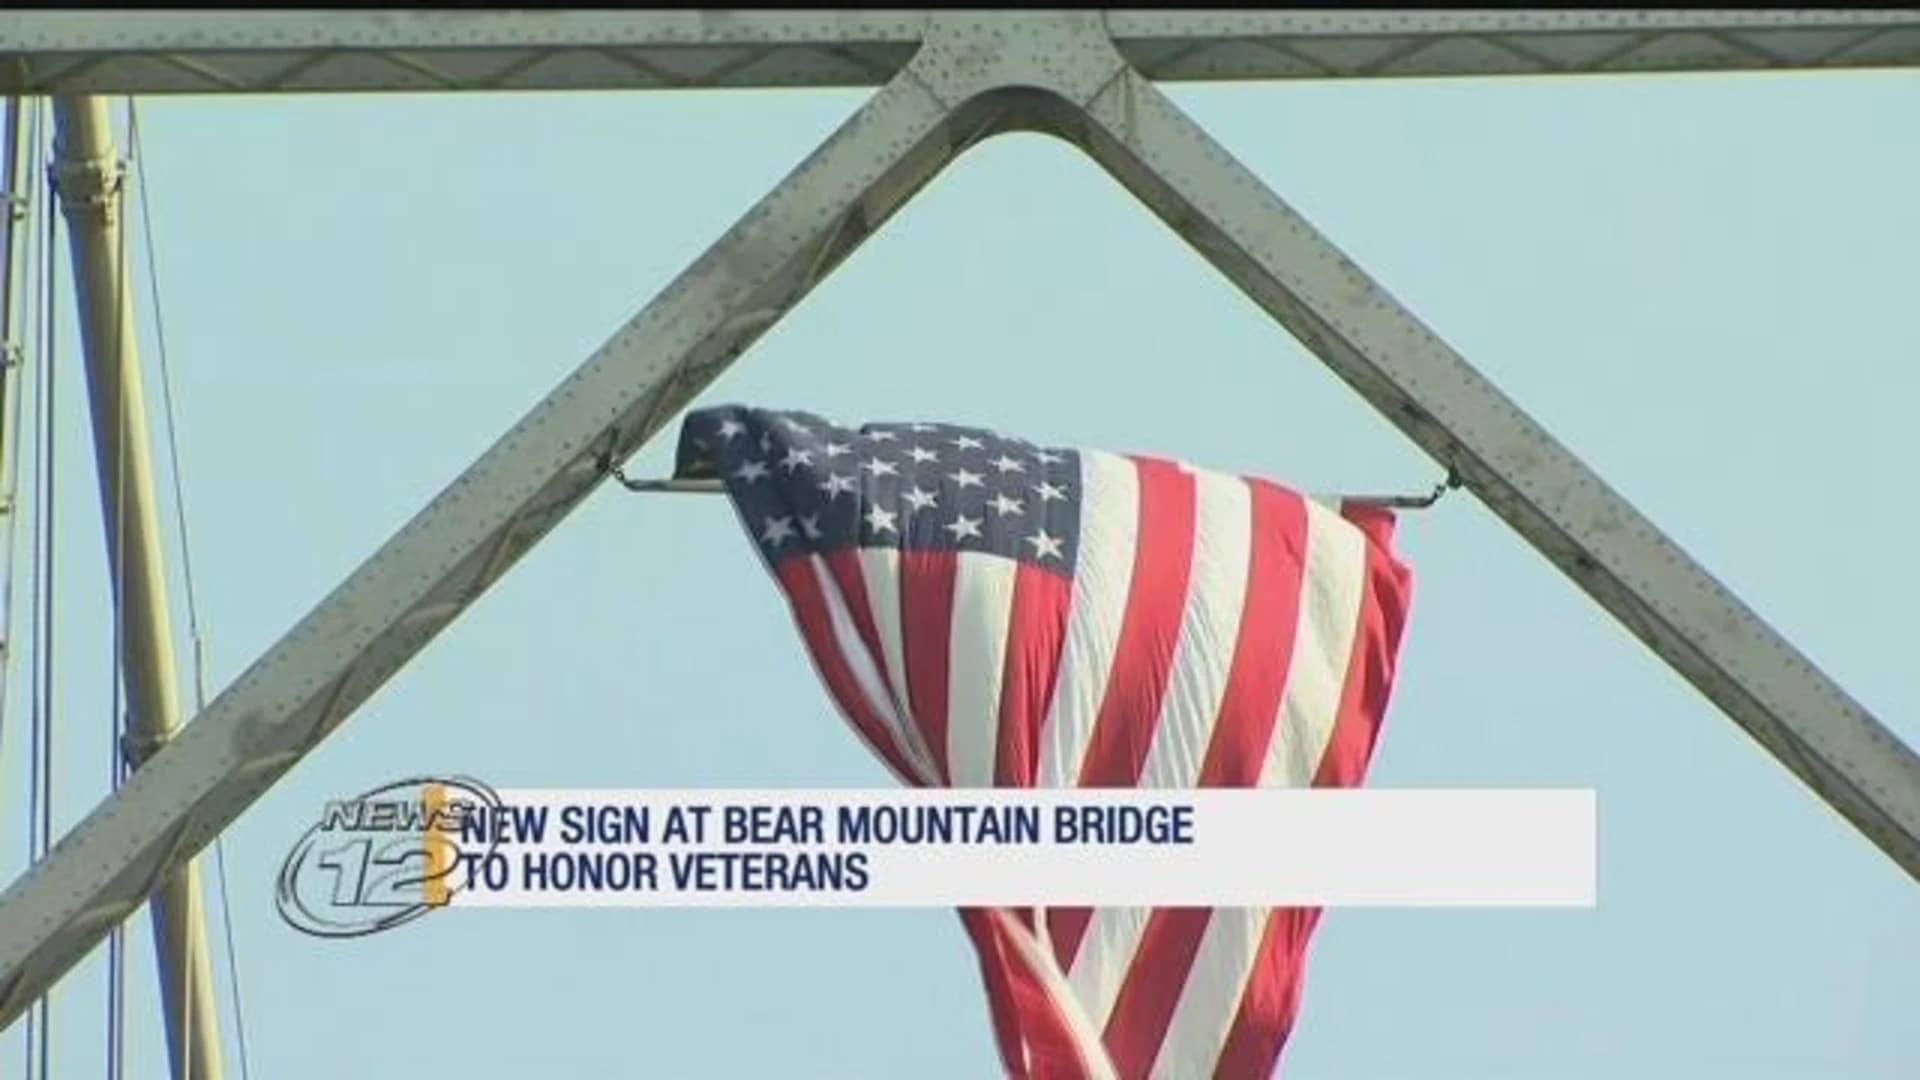 Bridge renaming marks lasting tribute for veterans